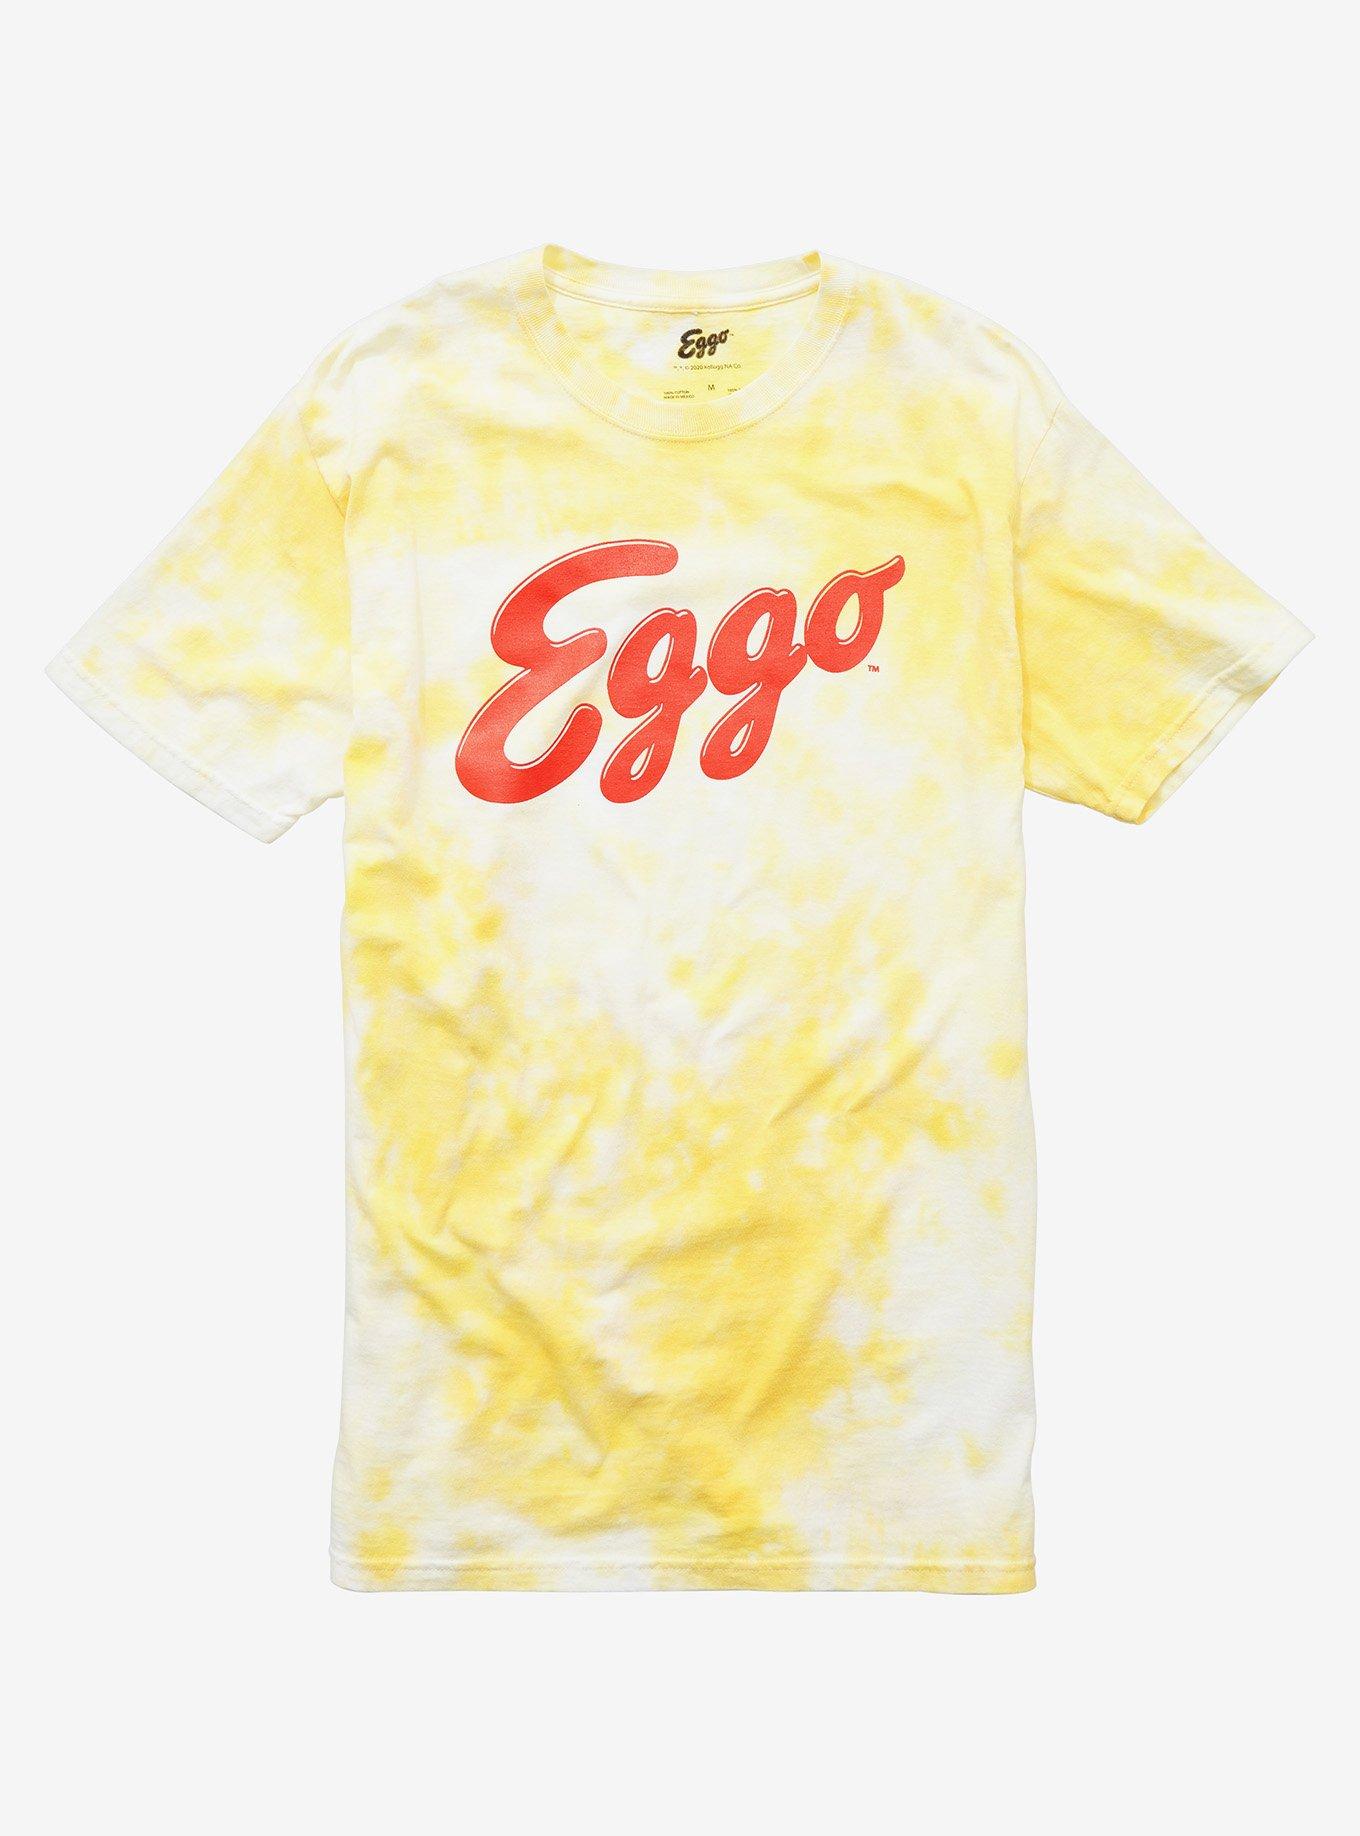 Eggo Waffles Tie-Dye Boyfriend Fit Girls T-Shirt, MULTI, hi-res